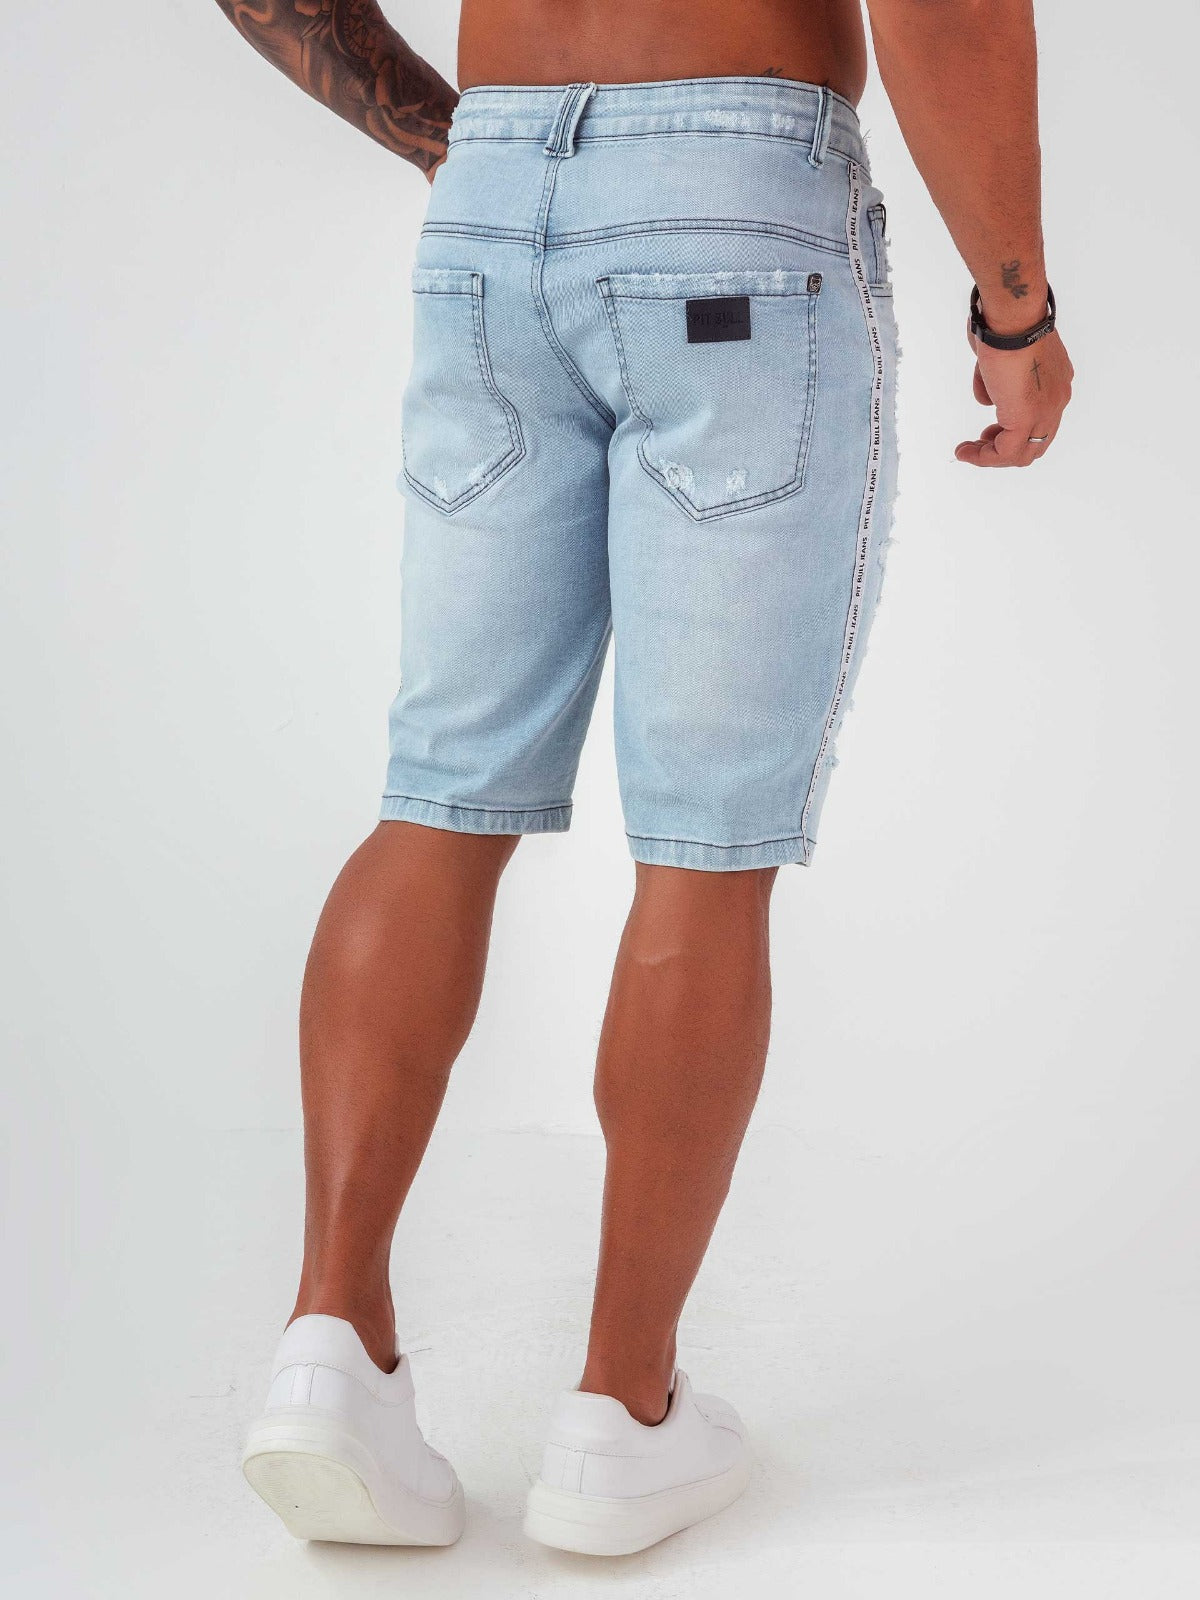 Pit Bull Jeans Men's Jeans Shorts 62627